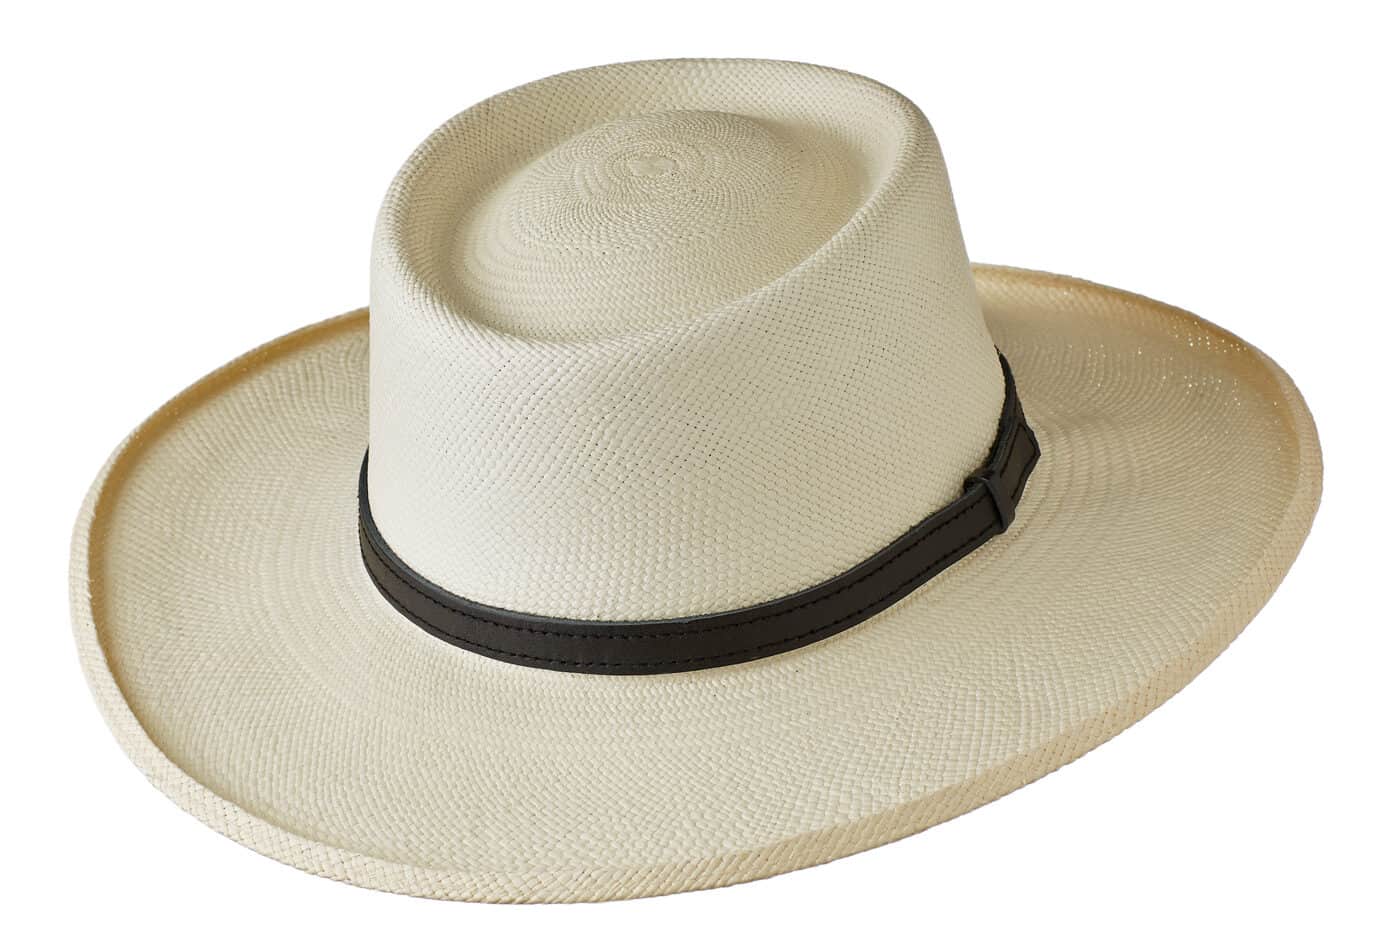 Planter style Panama hat